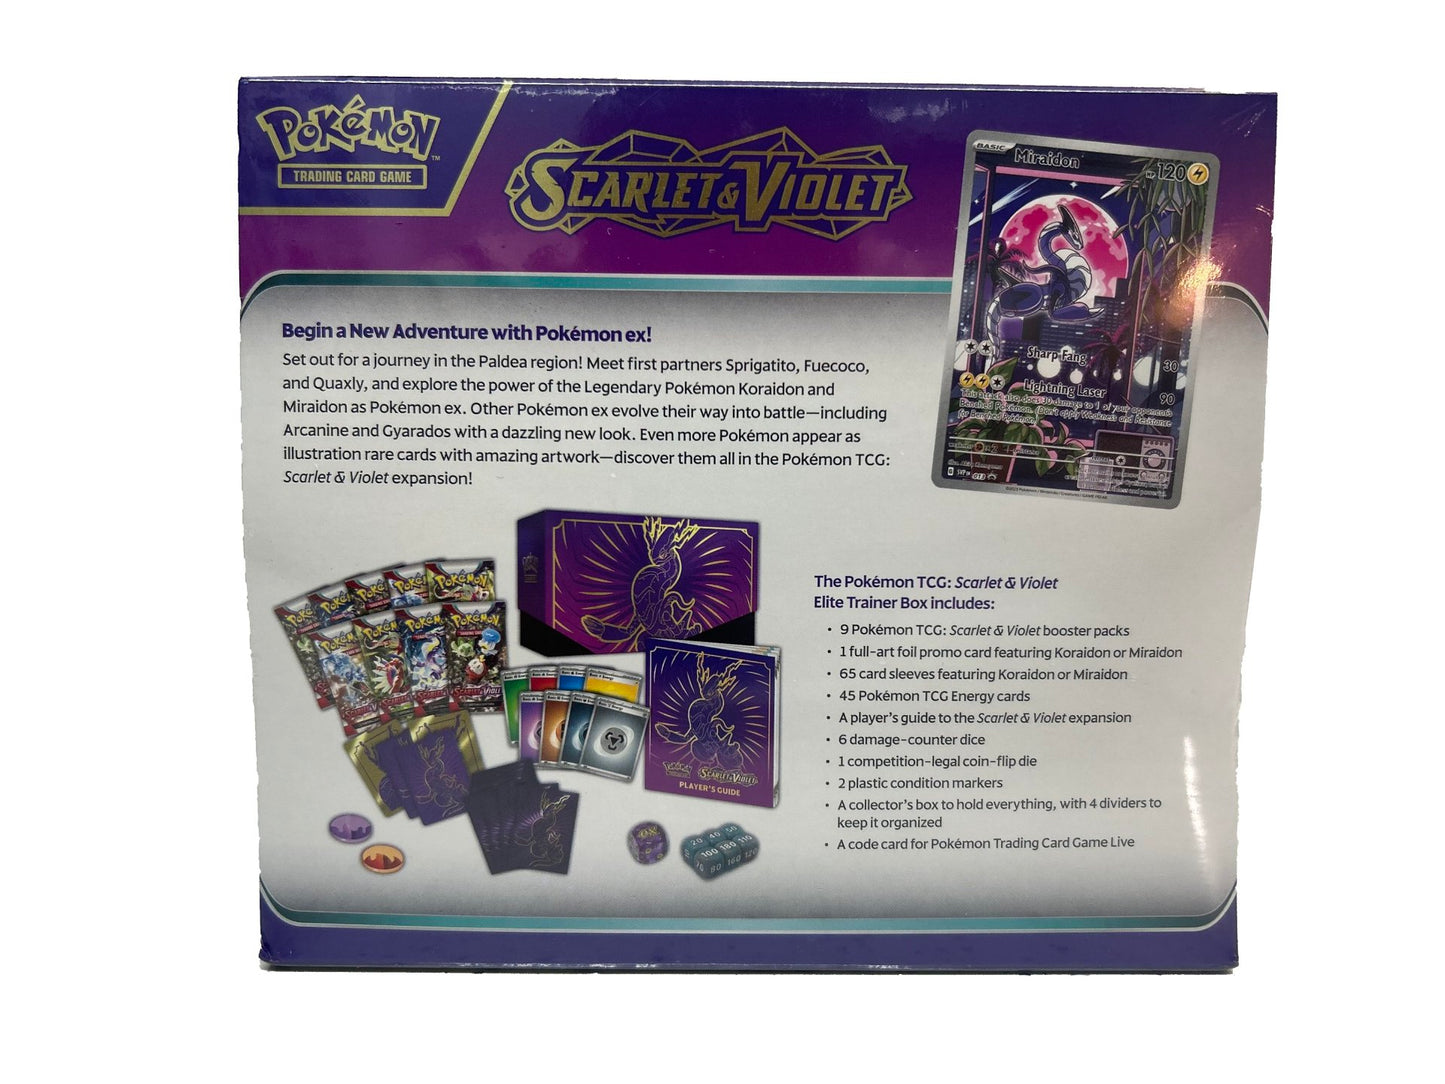 Pokémon Scarlet & Violet Elite Trainer Box